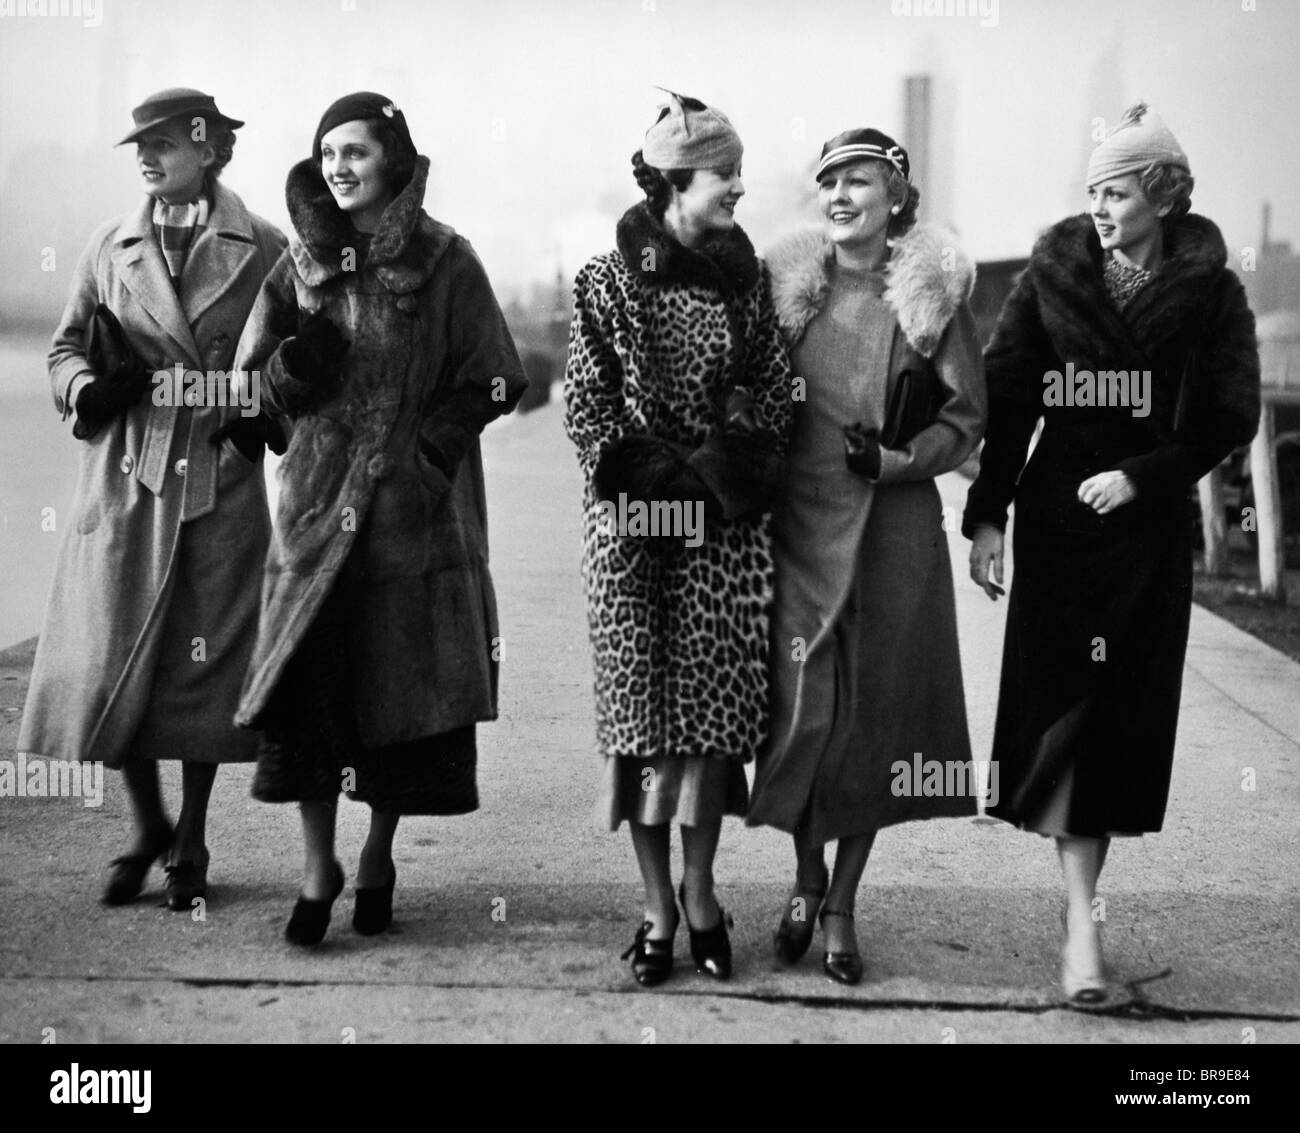 1930s FIVE WOMEN WALKING WEARING WINTER FUR COATS Stock Photo - Alamy